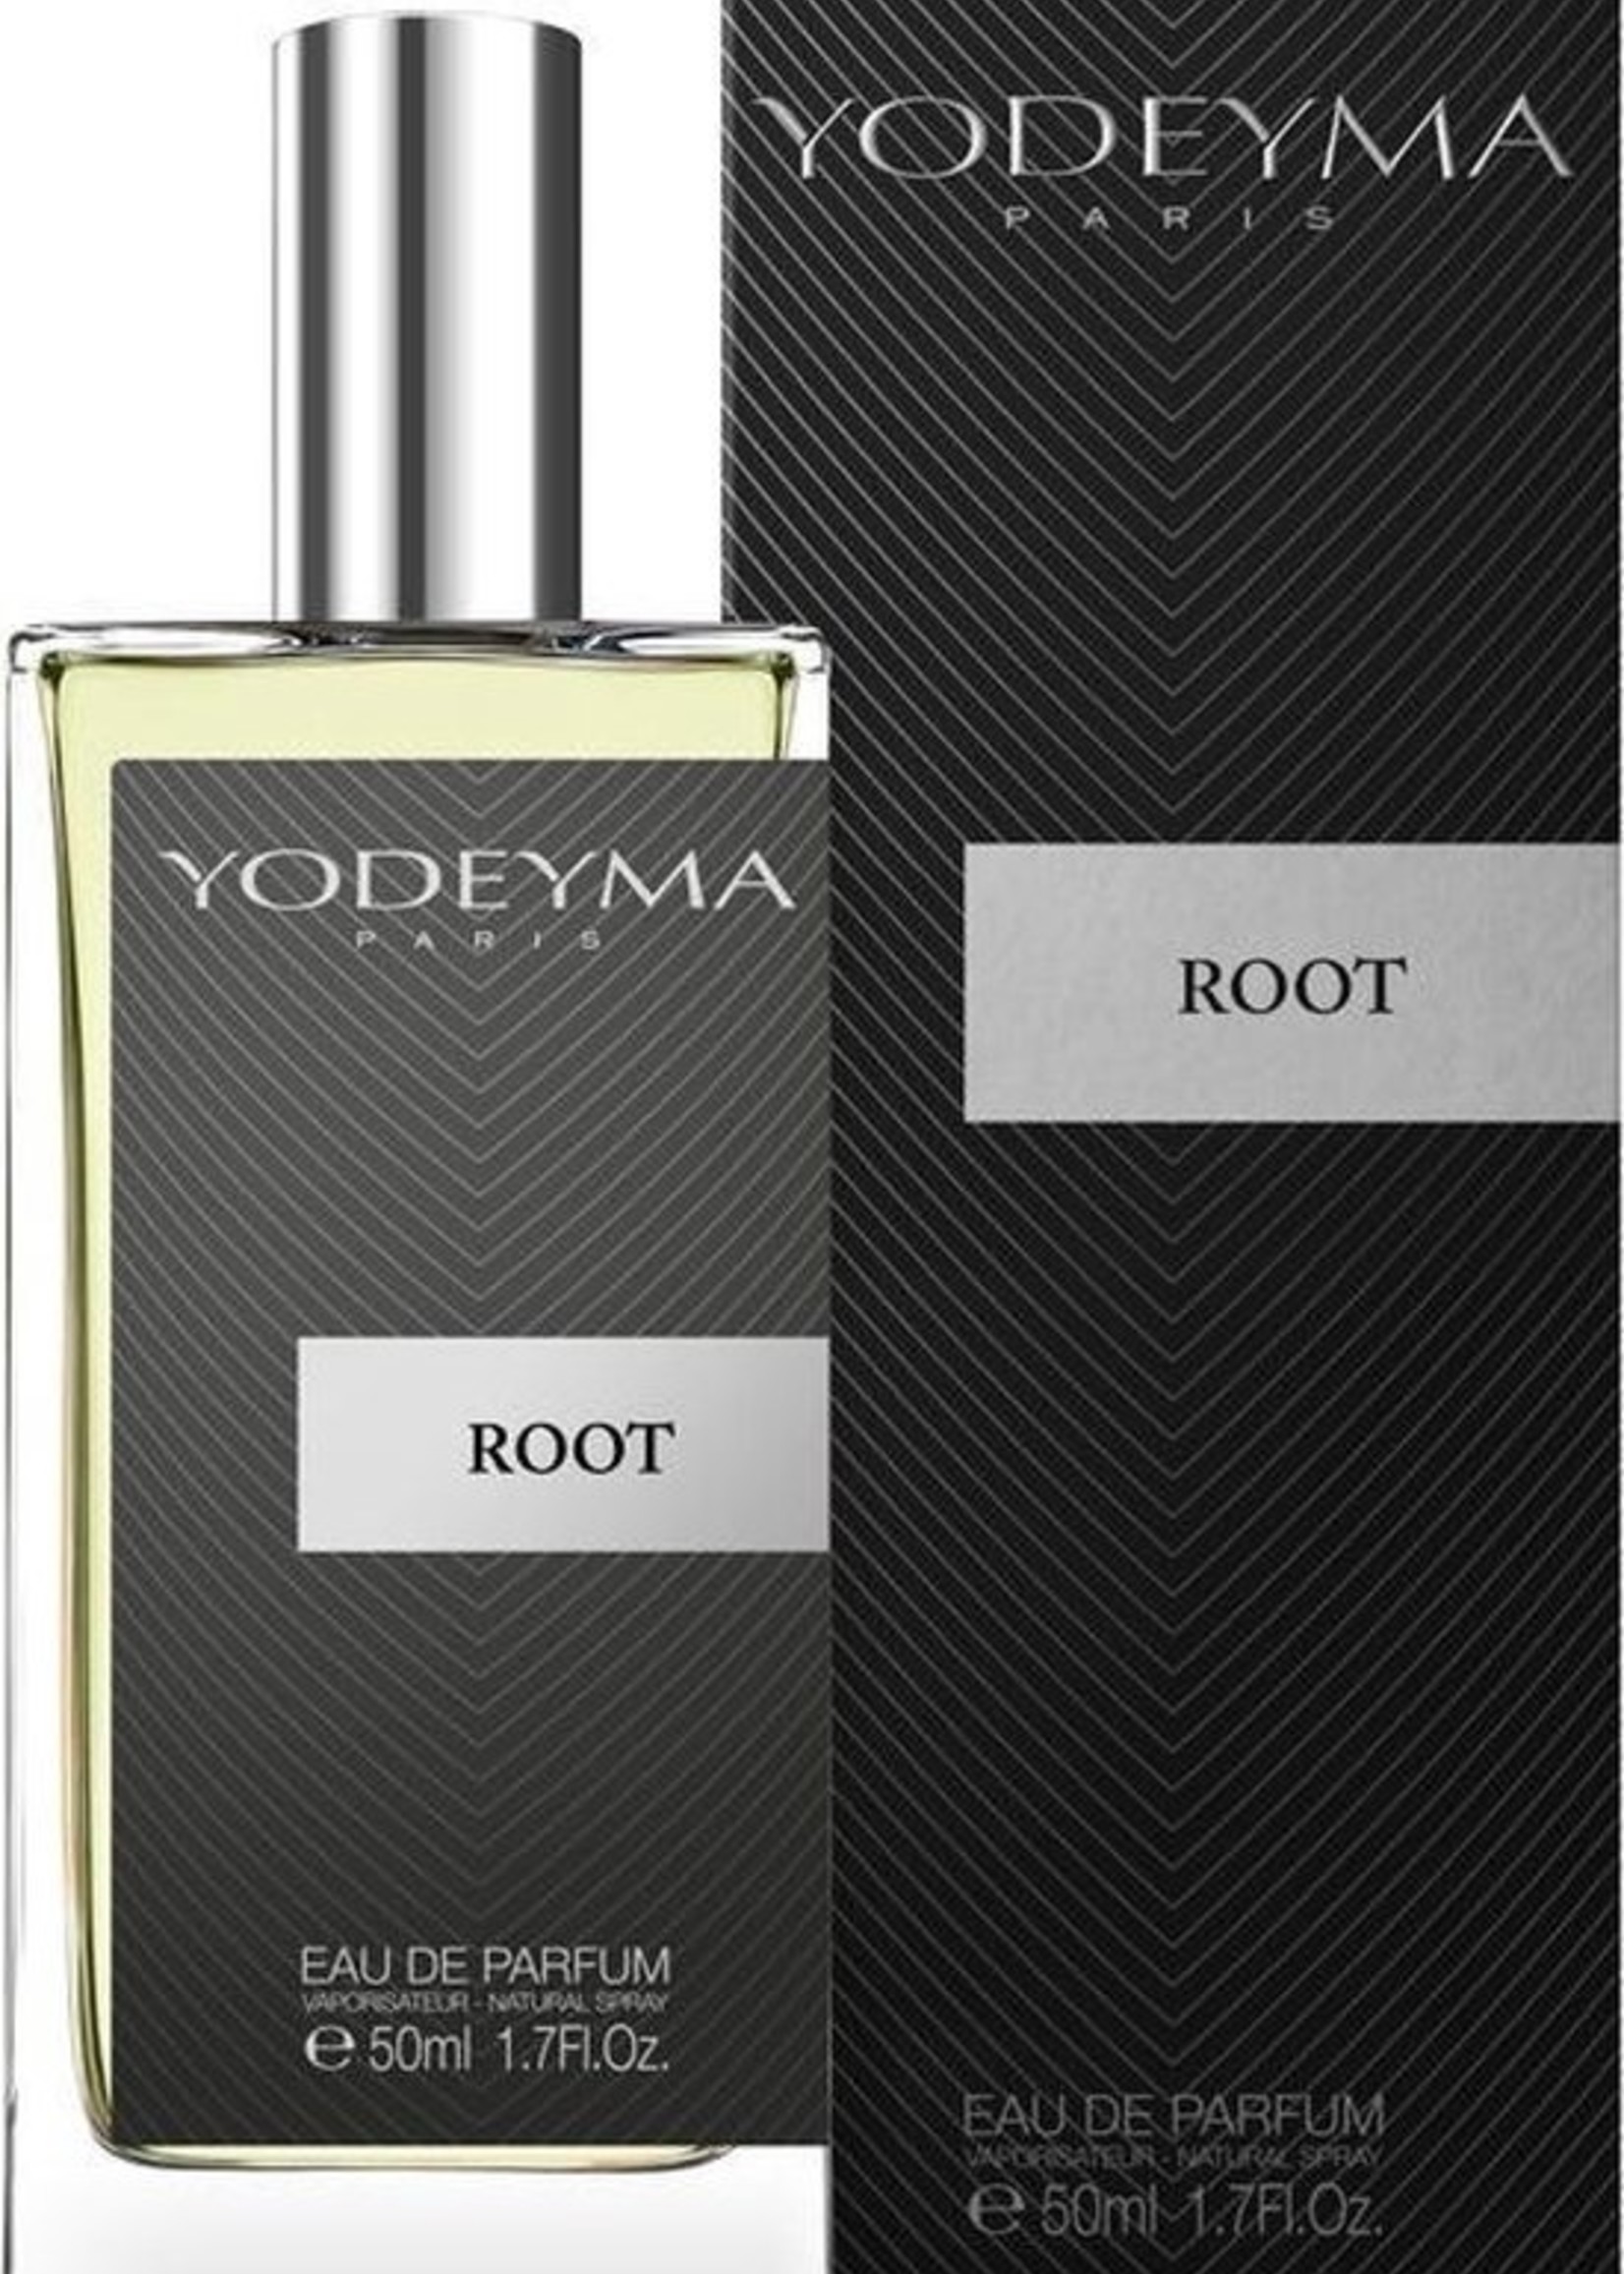 Yodeyma Parfums ROOT Eau de Parfum 50 ml.